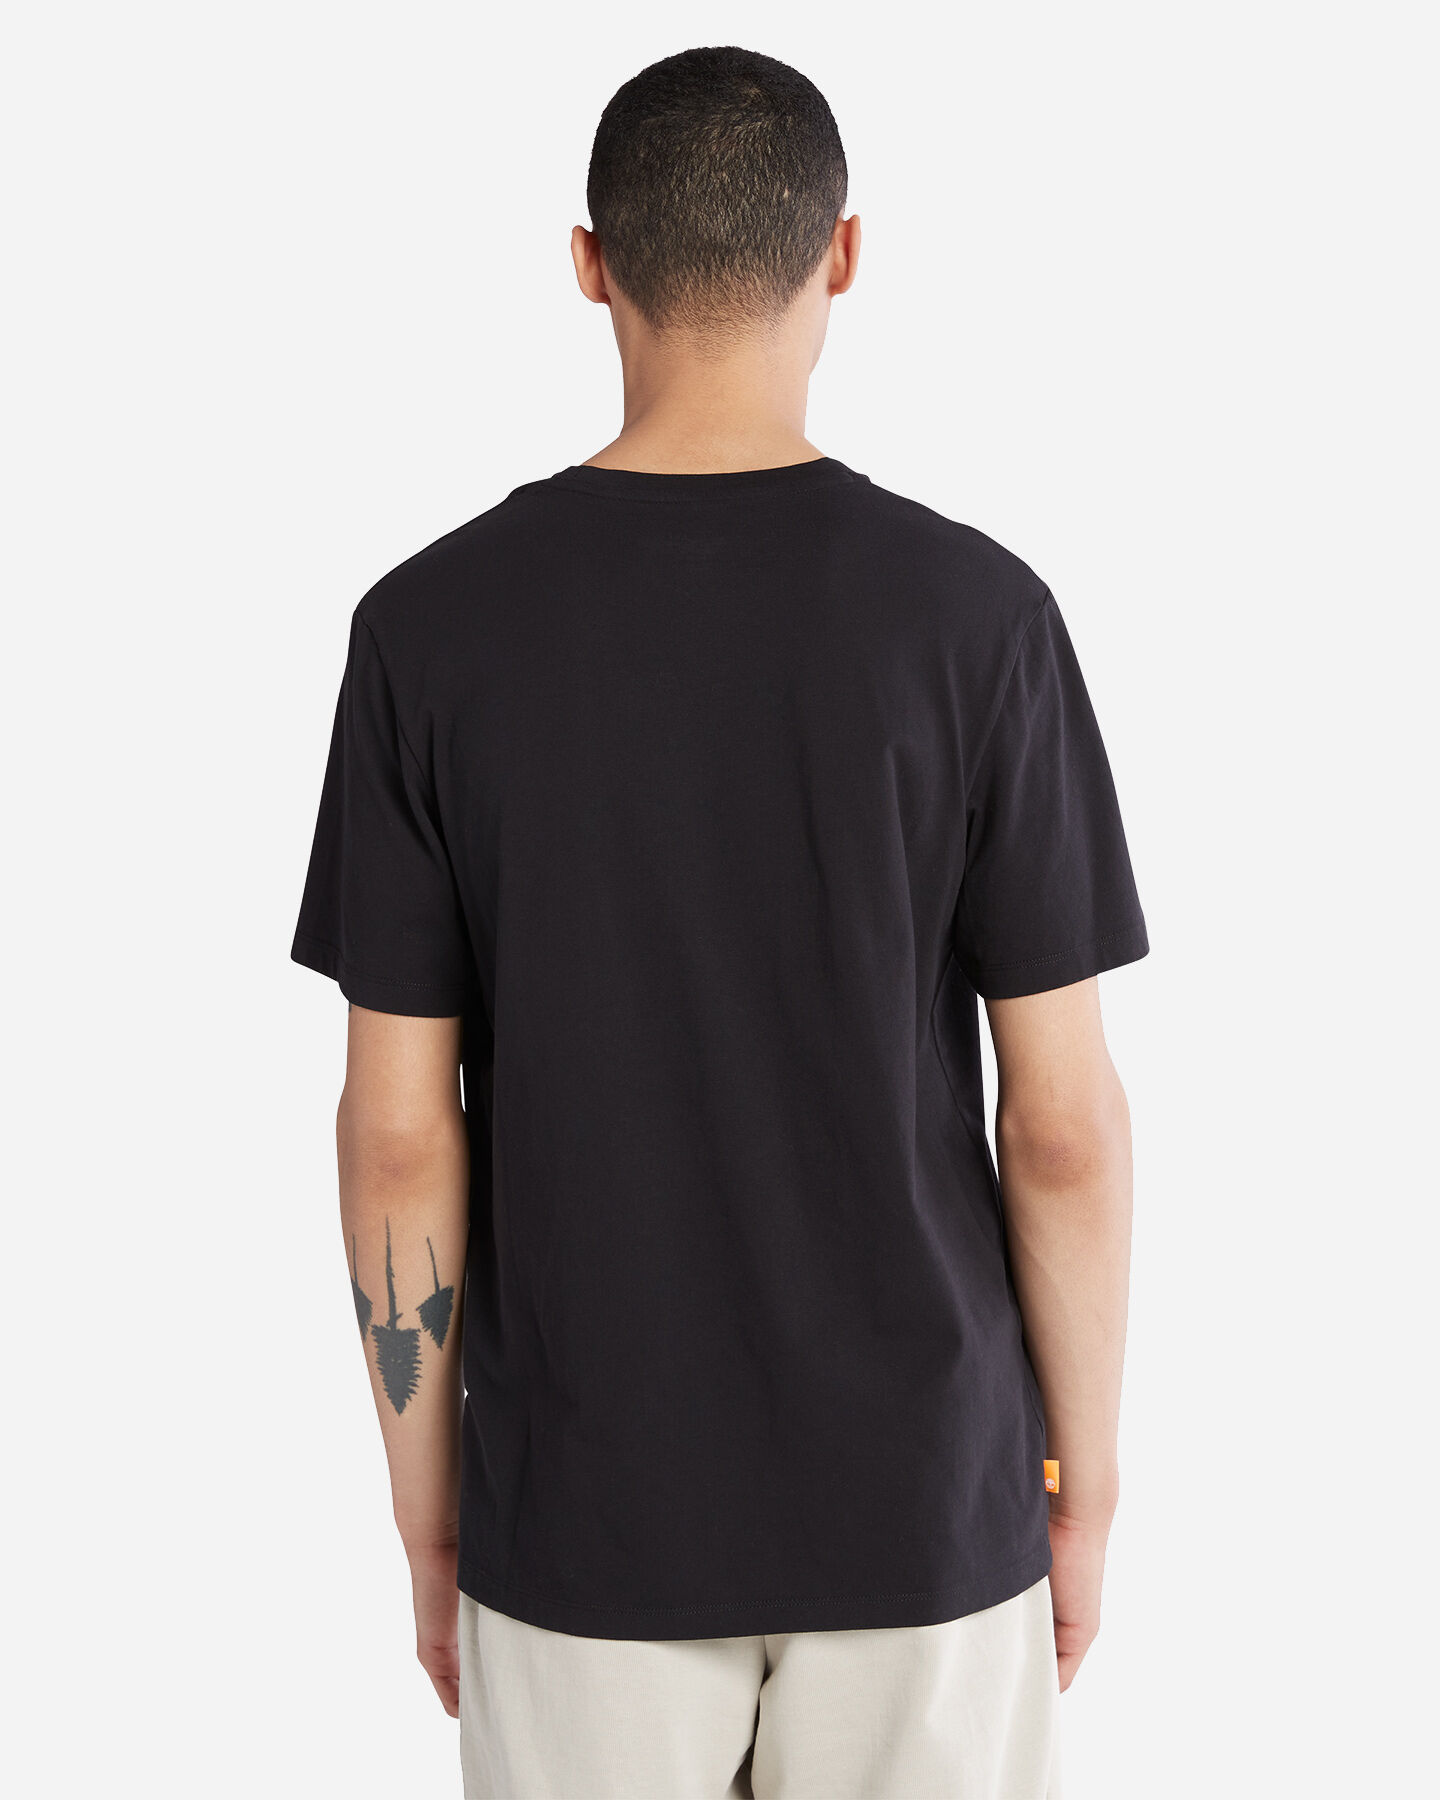  T-Shirt TIMBERLAND TREE LOGO GRAFIC M S4115301|0011|S scatto 2